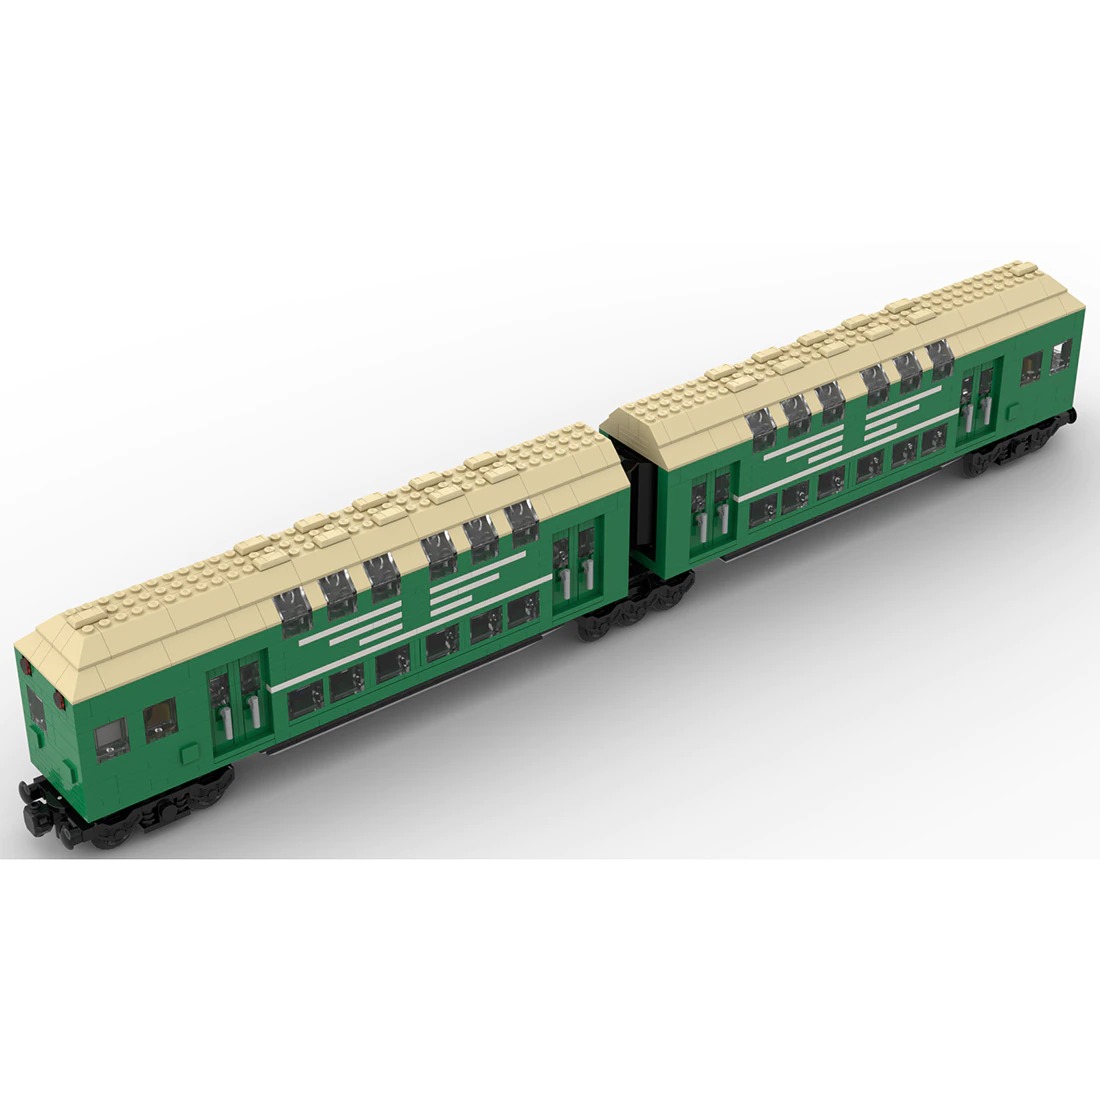 authorized moc 109281 7 axle train carri main 2 2 - ZHEGAO Block